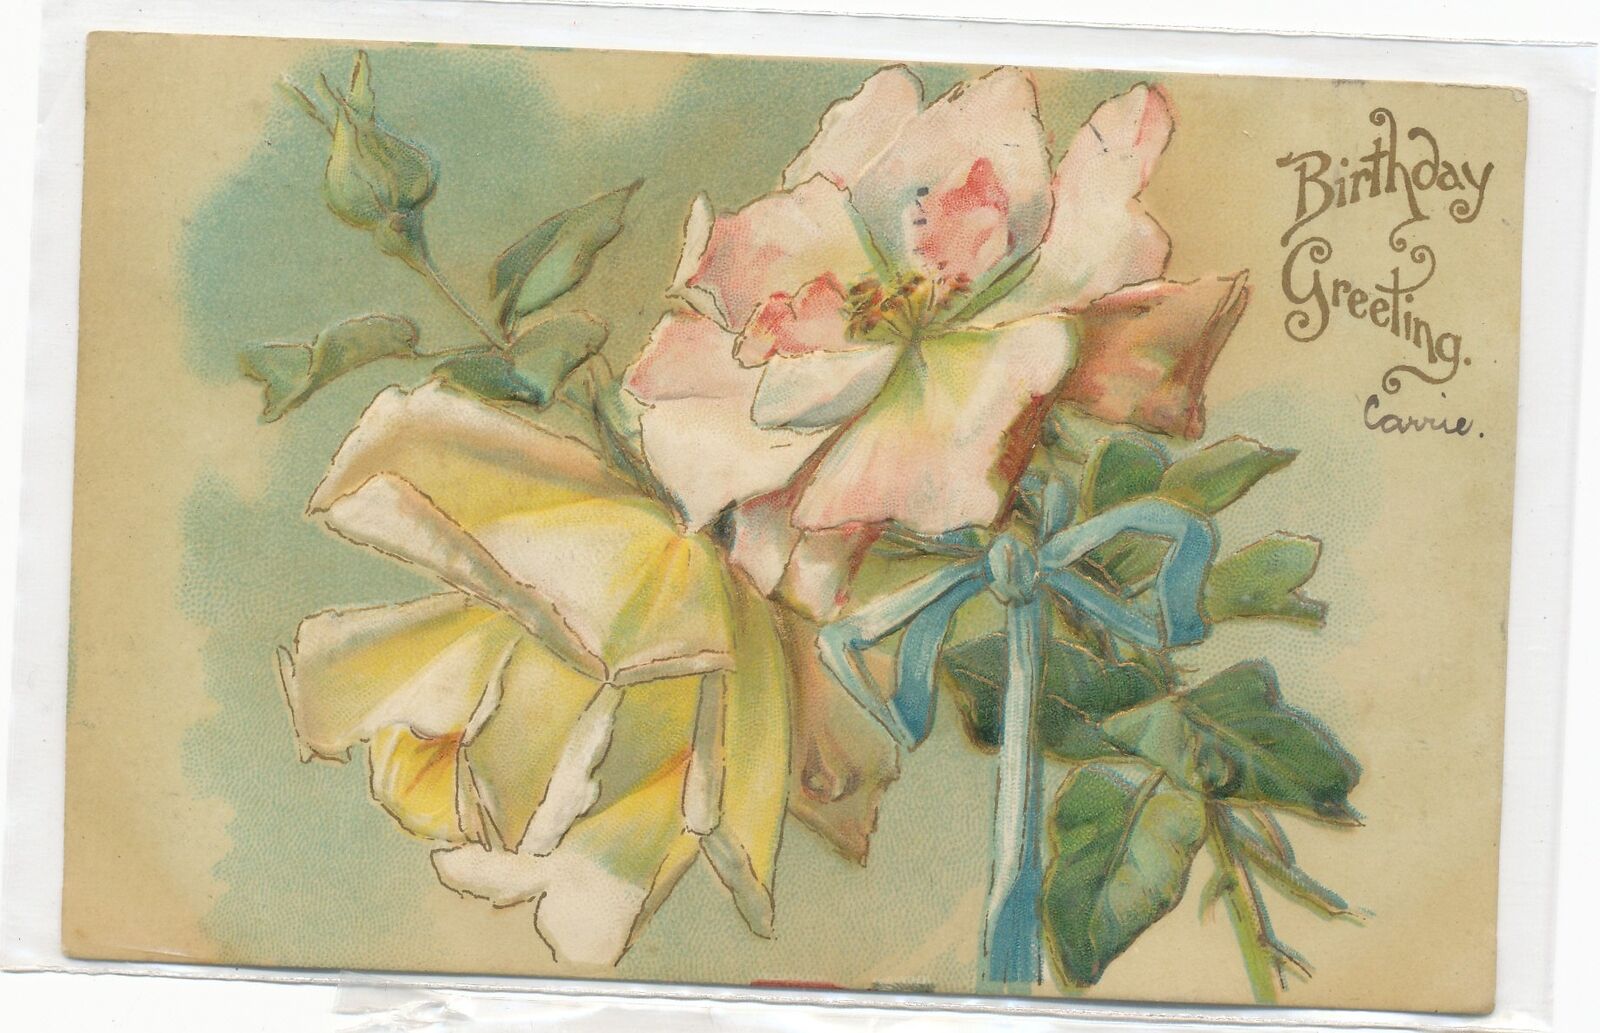 Birthday Greeting - Large Pink & Yellow Roses - Postcard #529 - used 1907